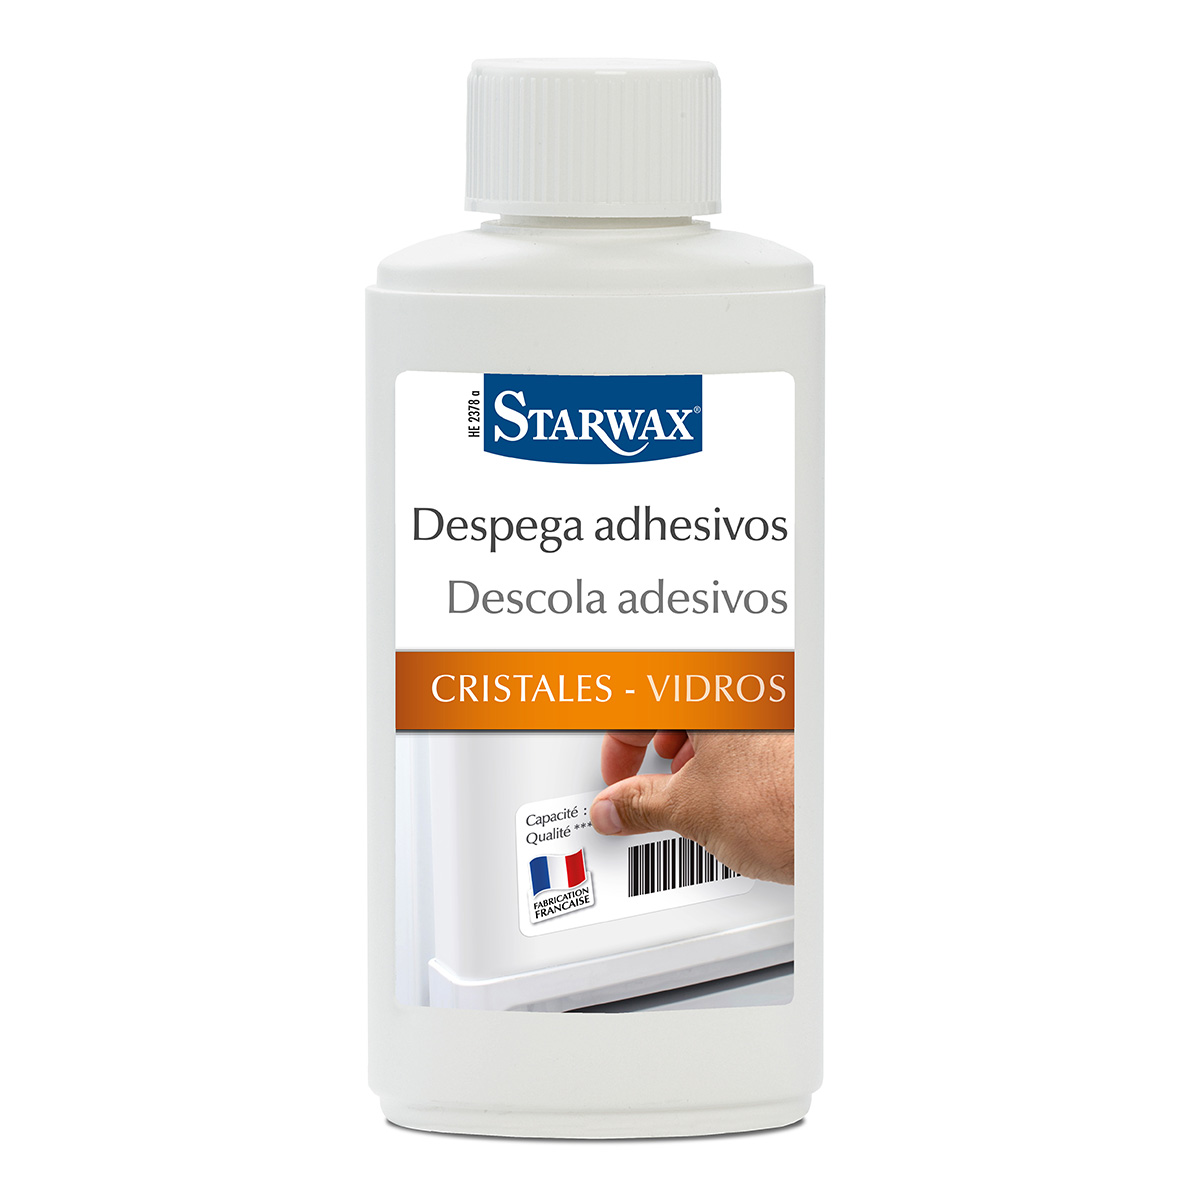 Despega adhesivos - Starwax